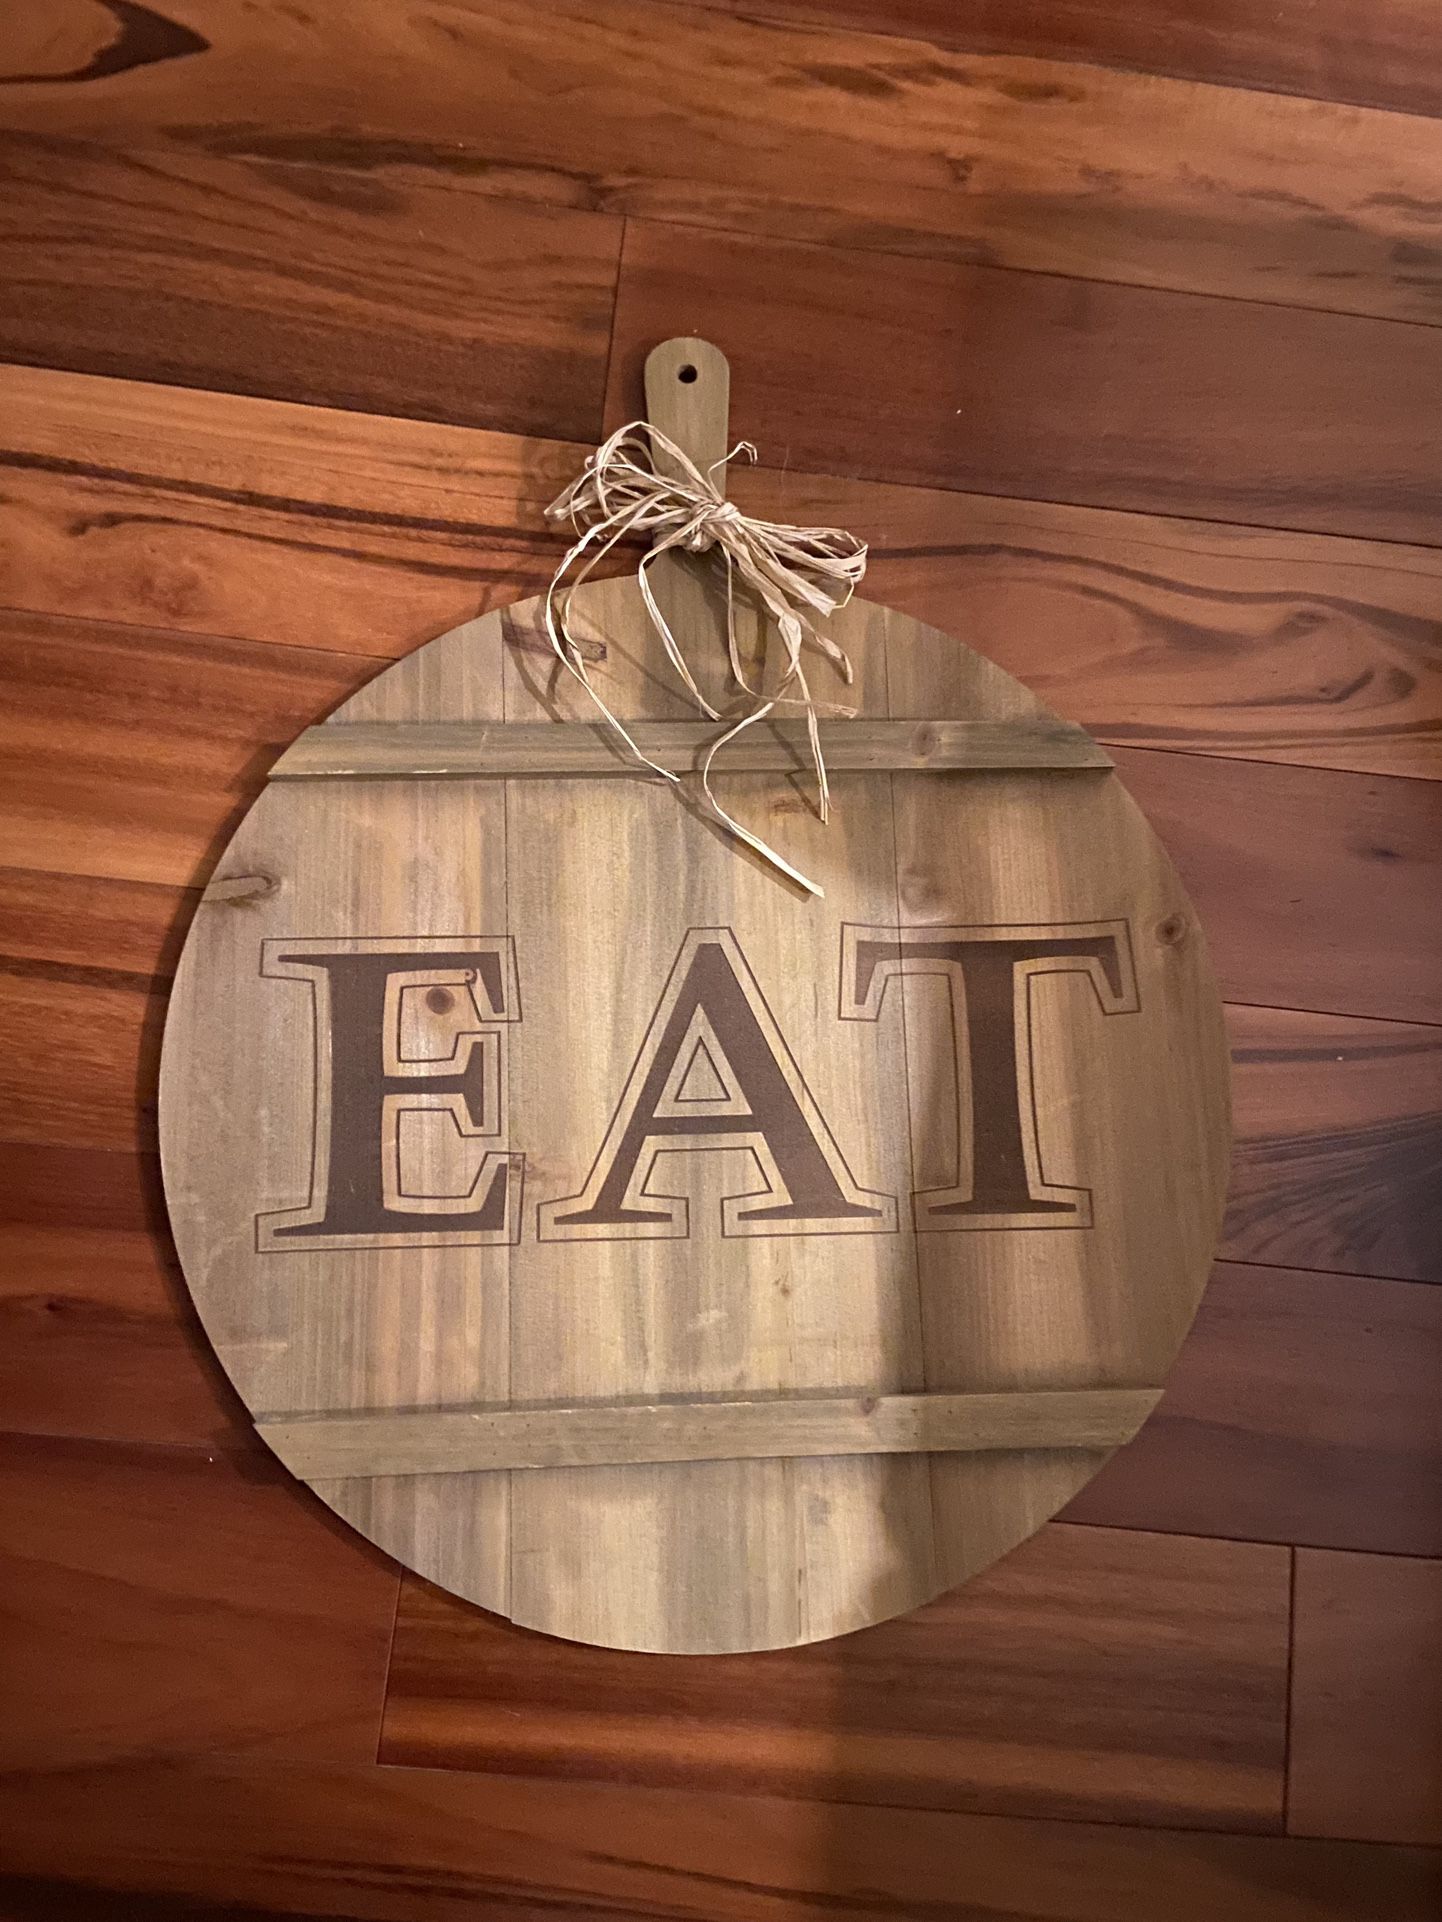 Giant Kitchen Board Eat Sign Like New Farmhouse Decor 